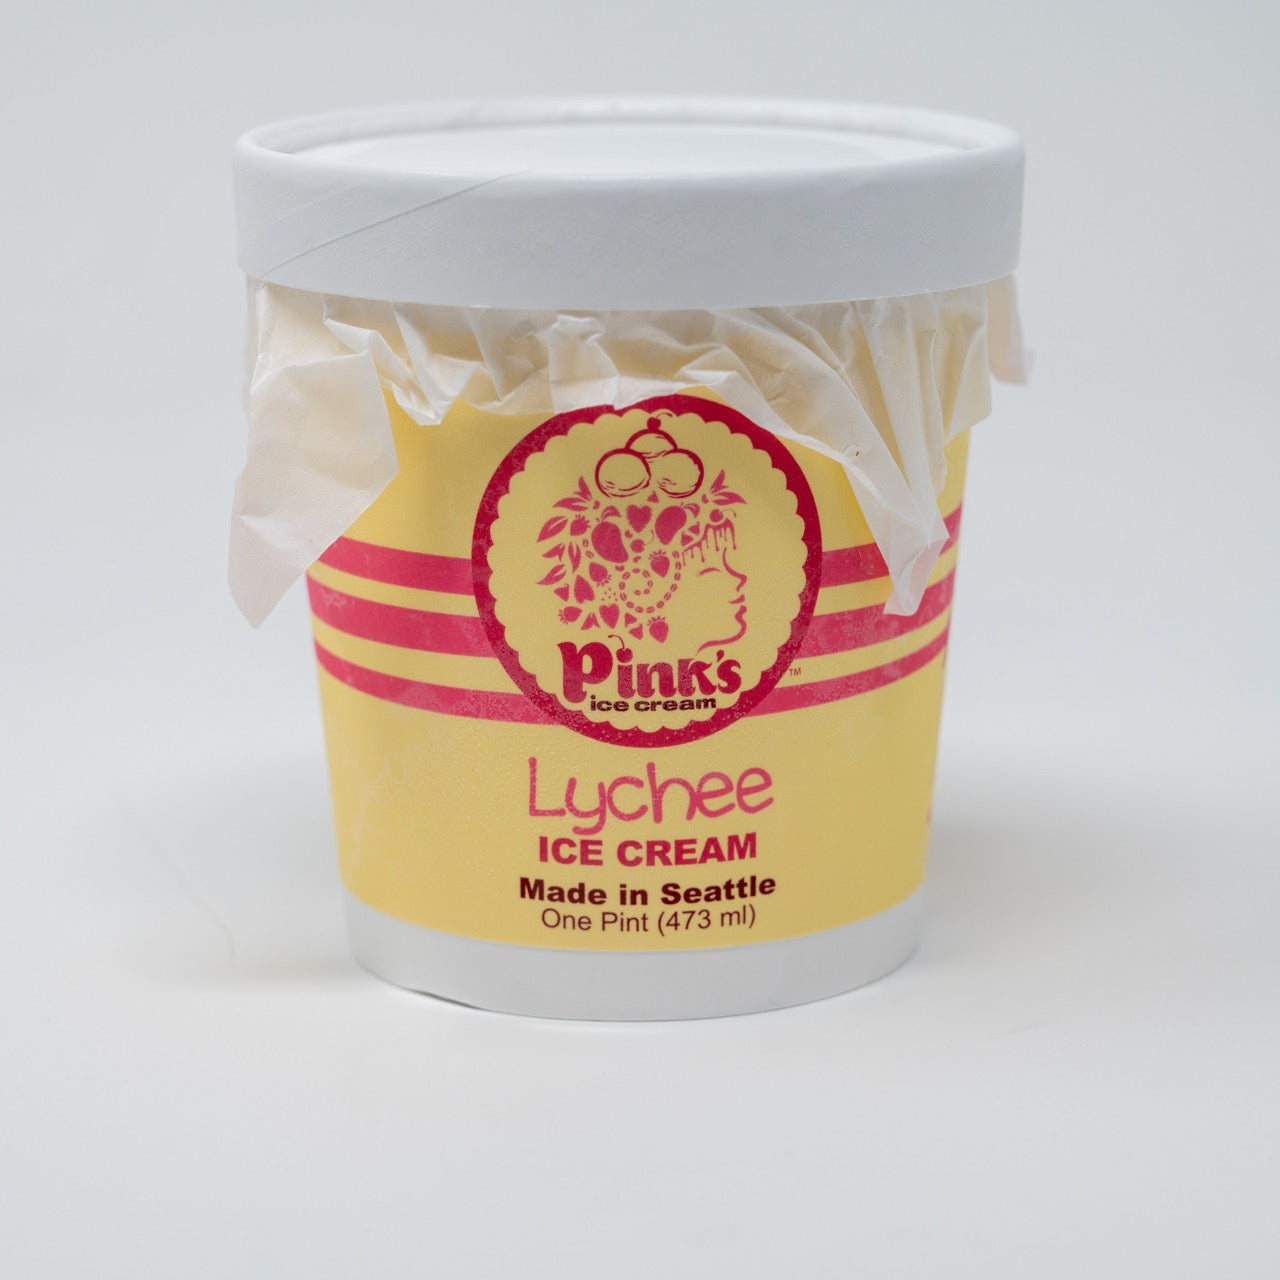 Lychee Ice Cream Pint - Macadons